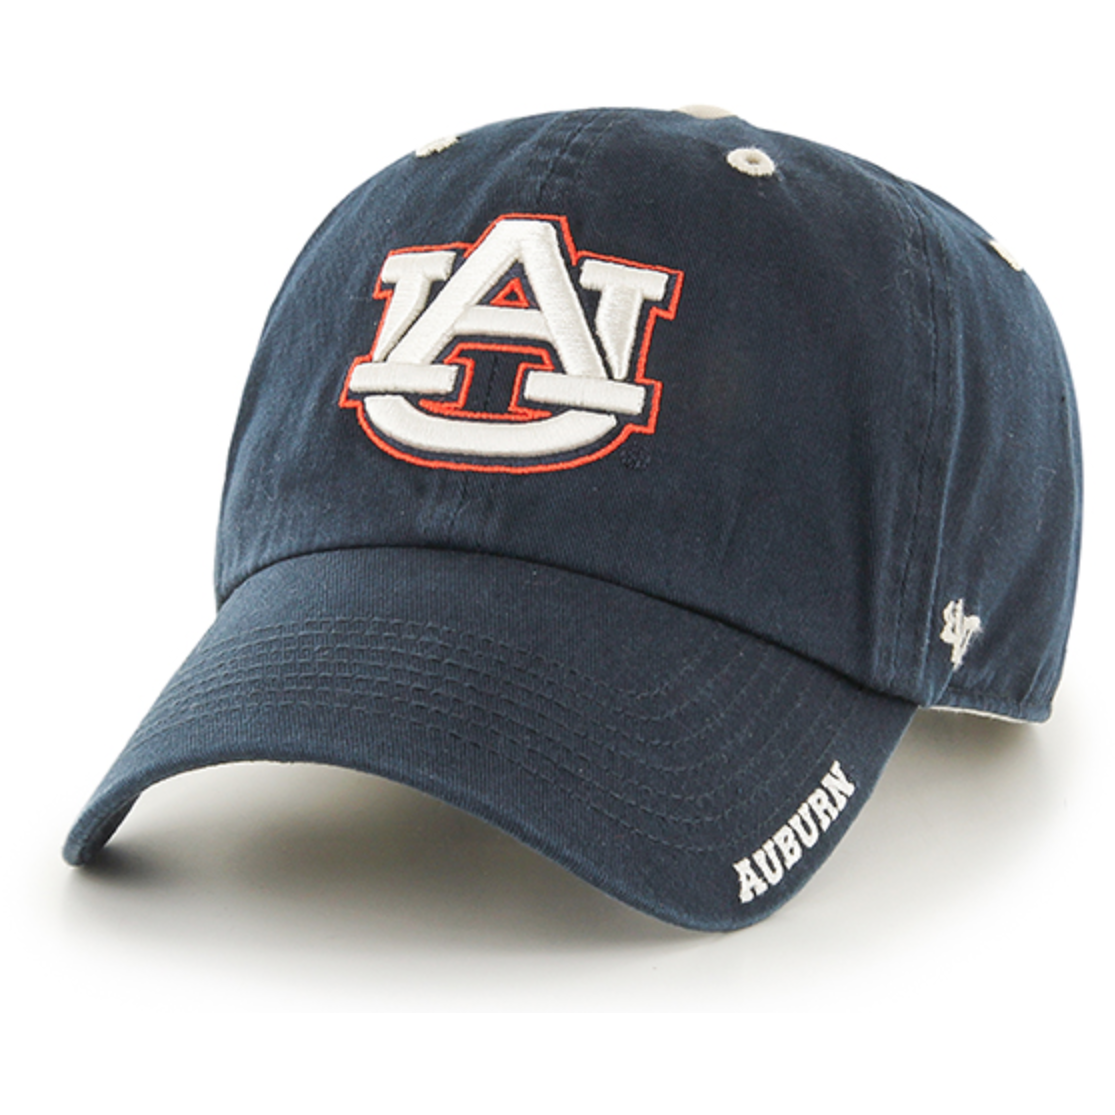 Auburn "Classic AU" Hat